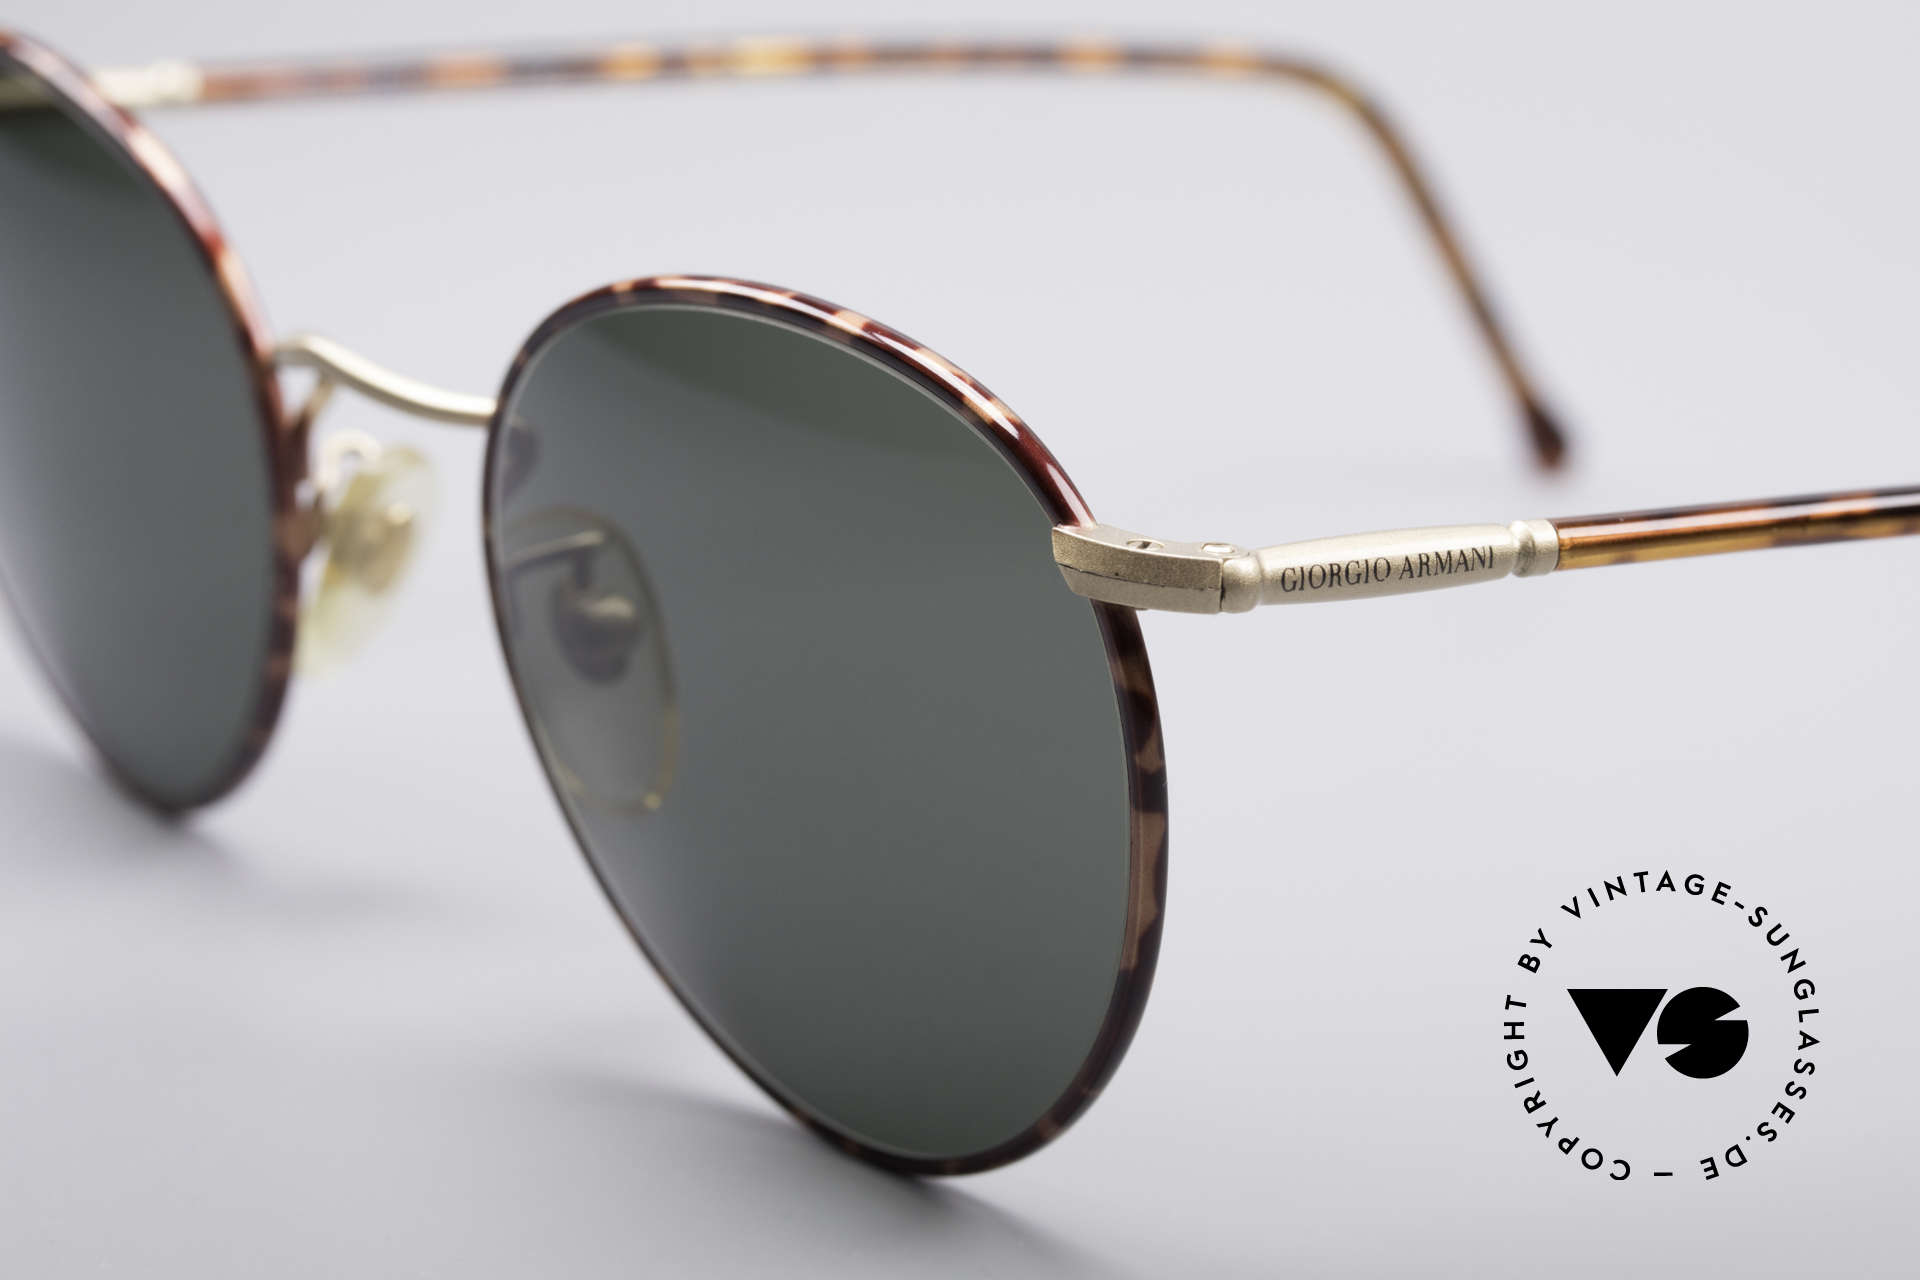 Sunglasses Giorgio Armani 186 Classic 90's Panto Glasses | Vintage ...